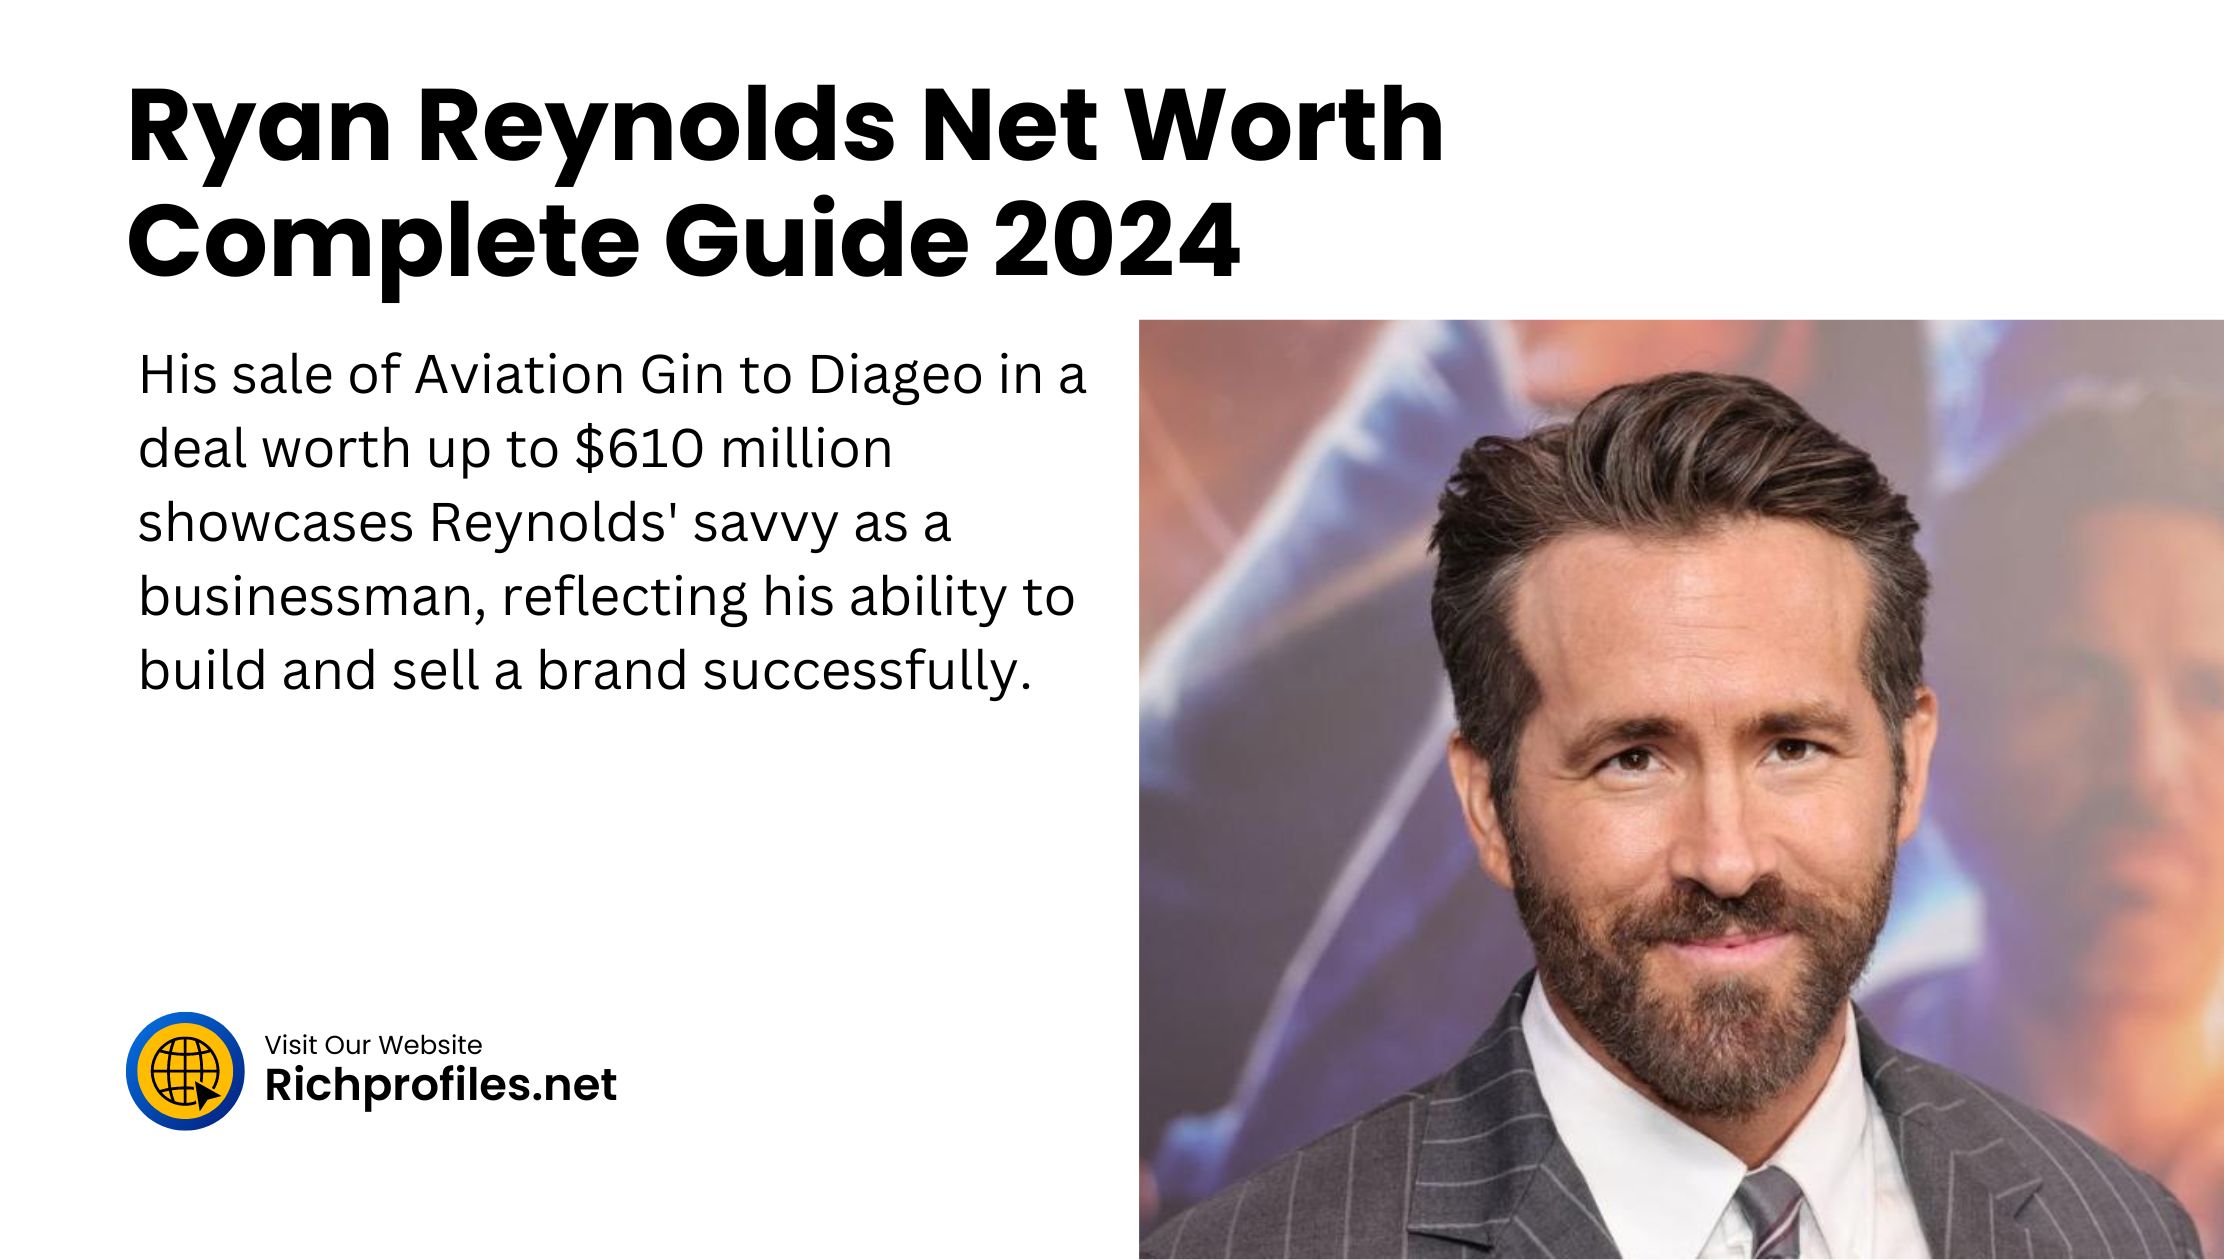 Ryan Reynolds Net Worth Complete Guide 2024